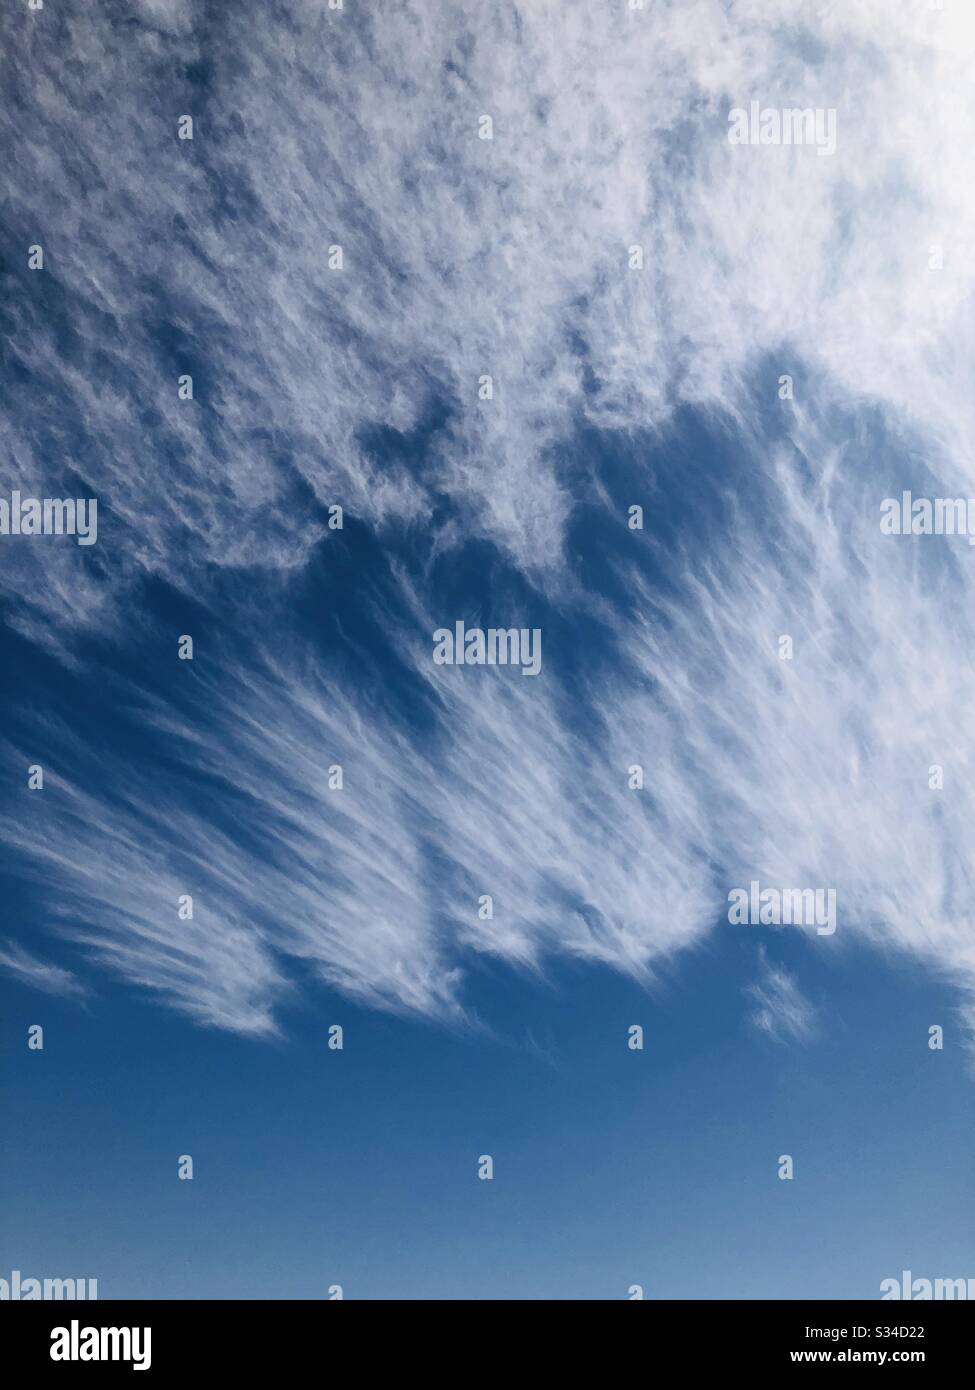 Copy space, blue sky, strange clouds, natural or unnatural, spring, upward angle, texture, YumaAZ Stock Photo